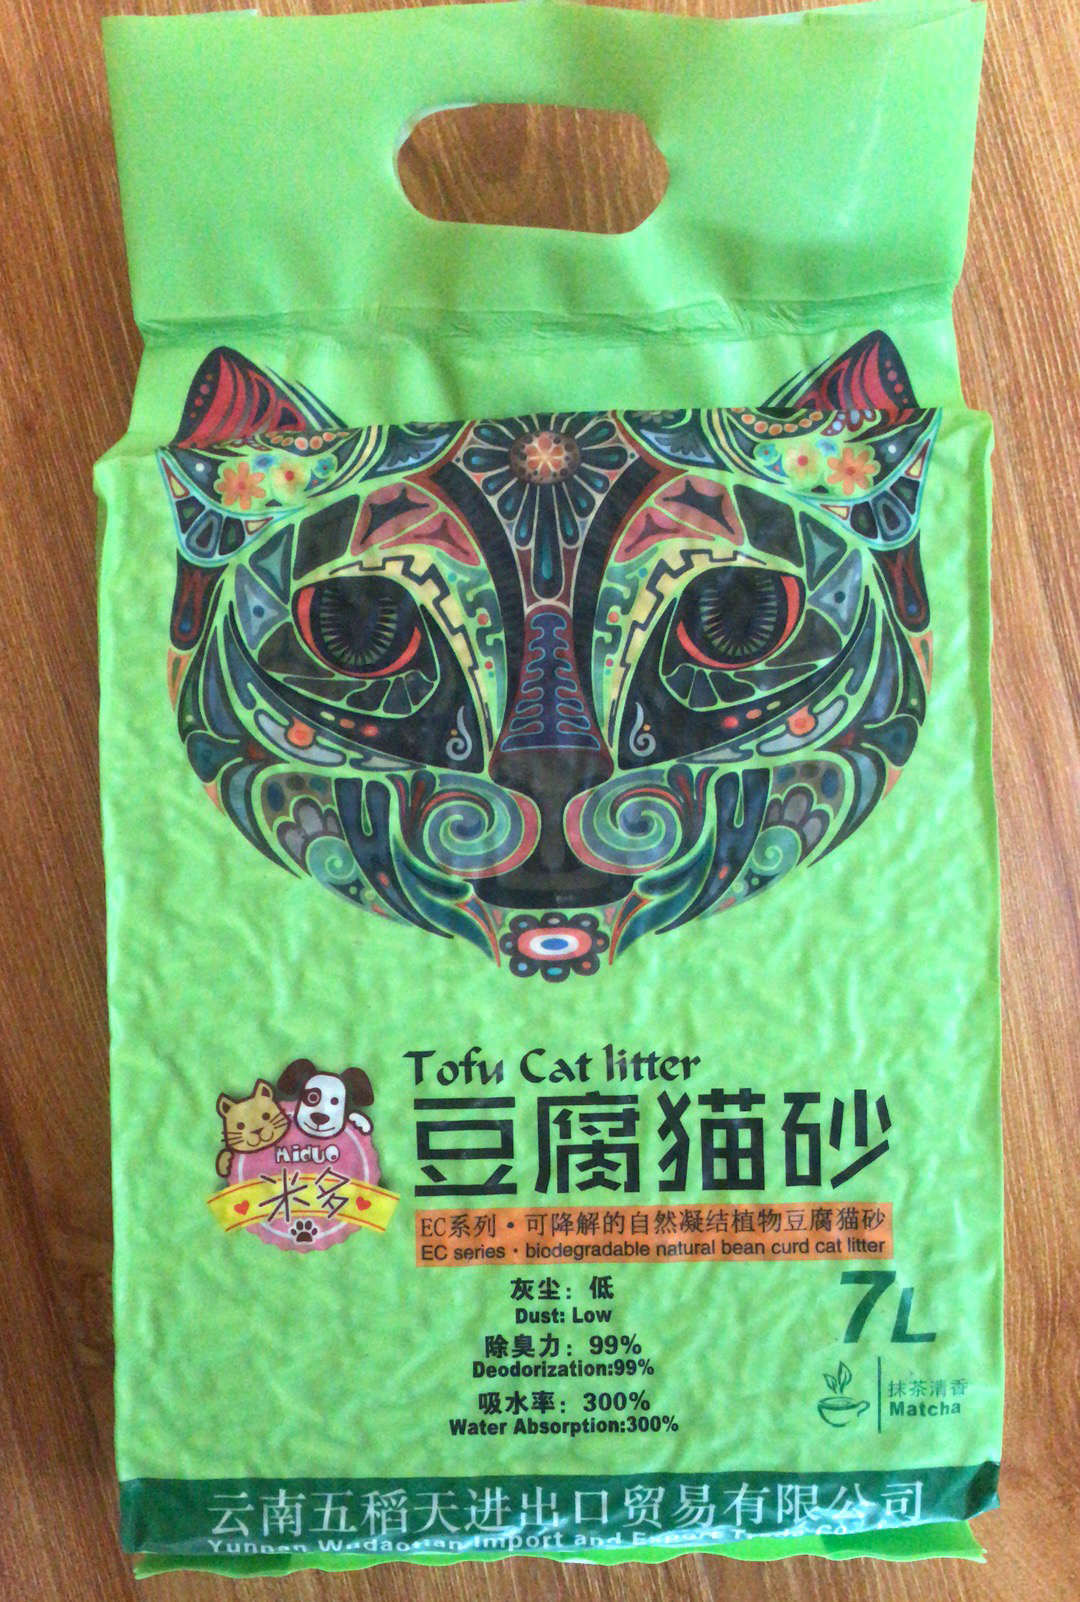 Miduo Tofu Cat Litter (Green tea)